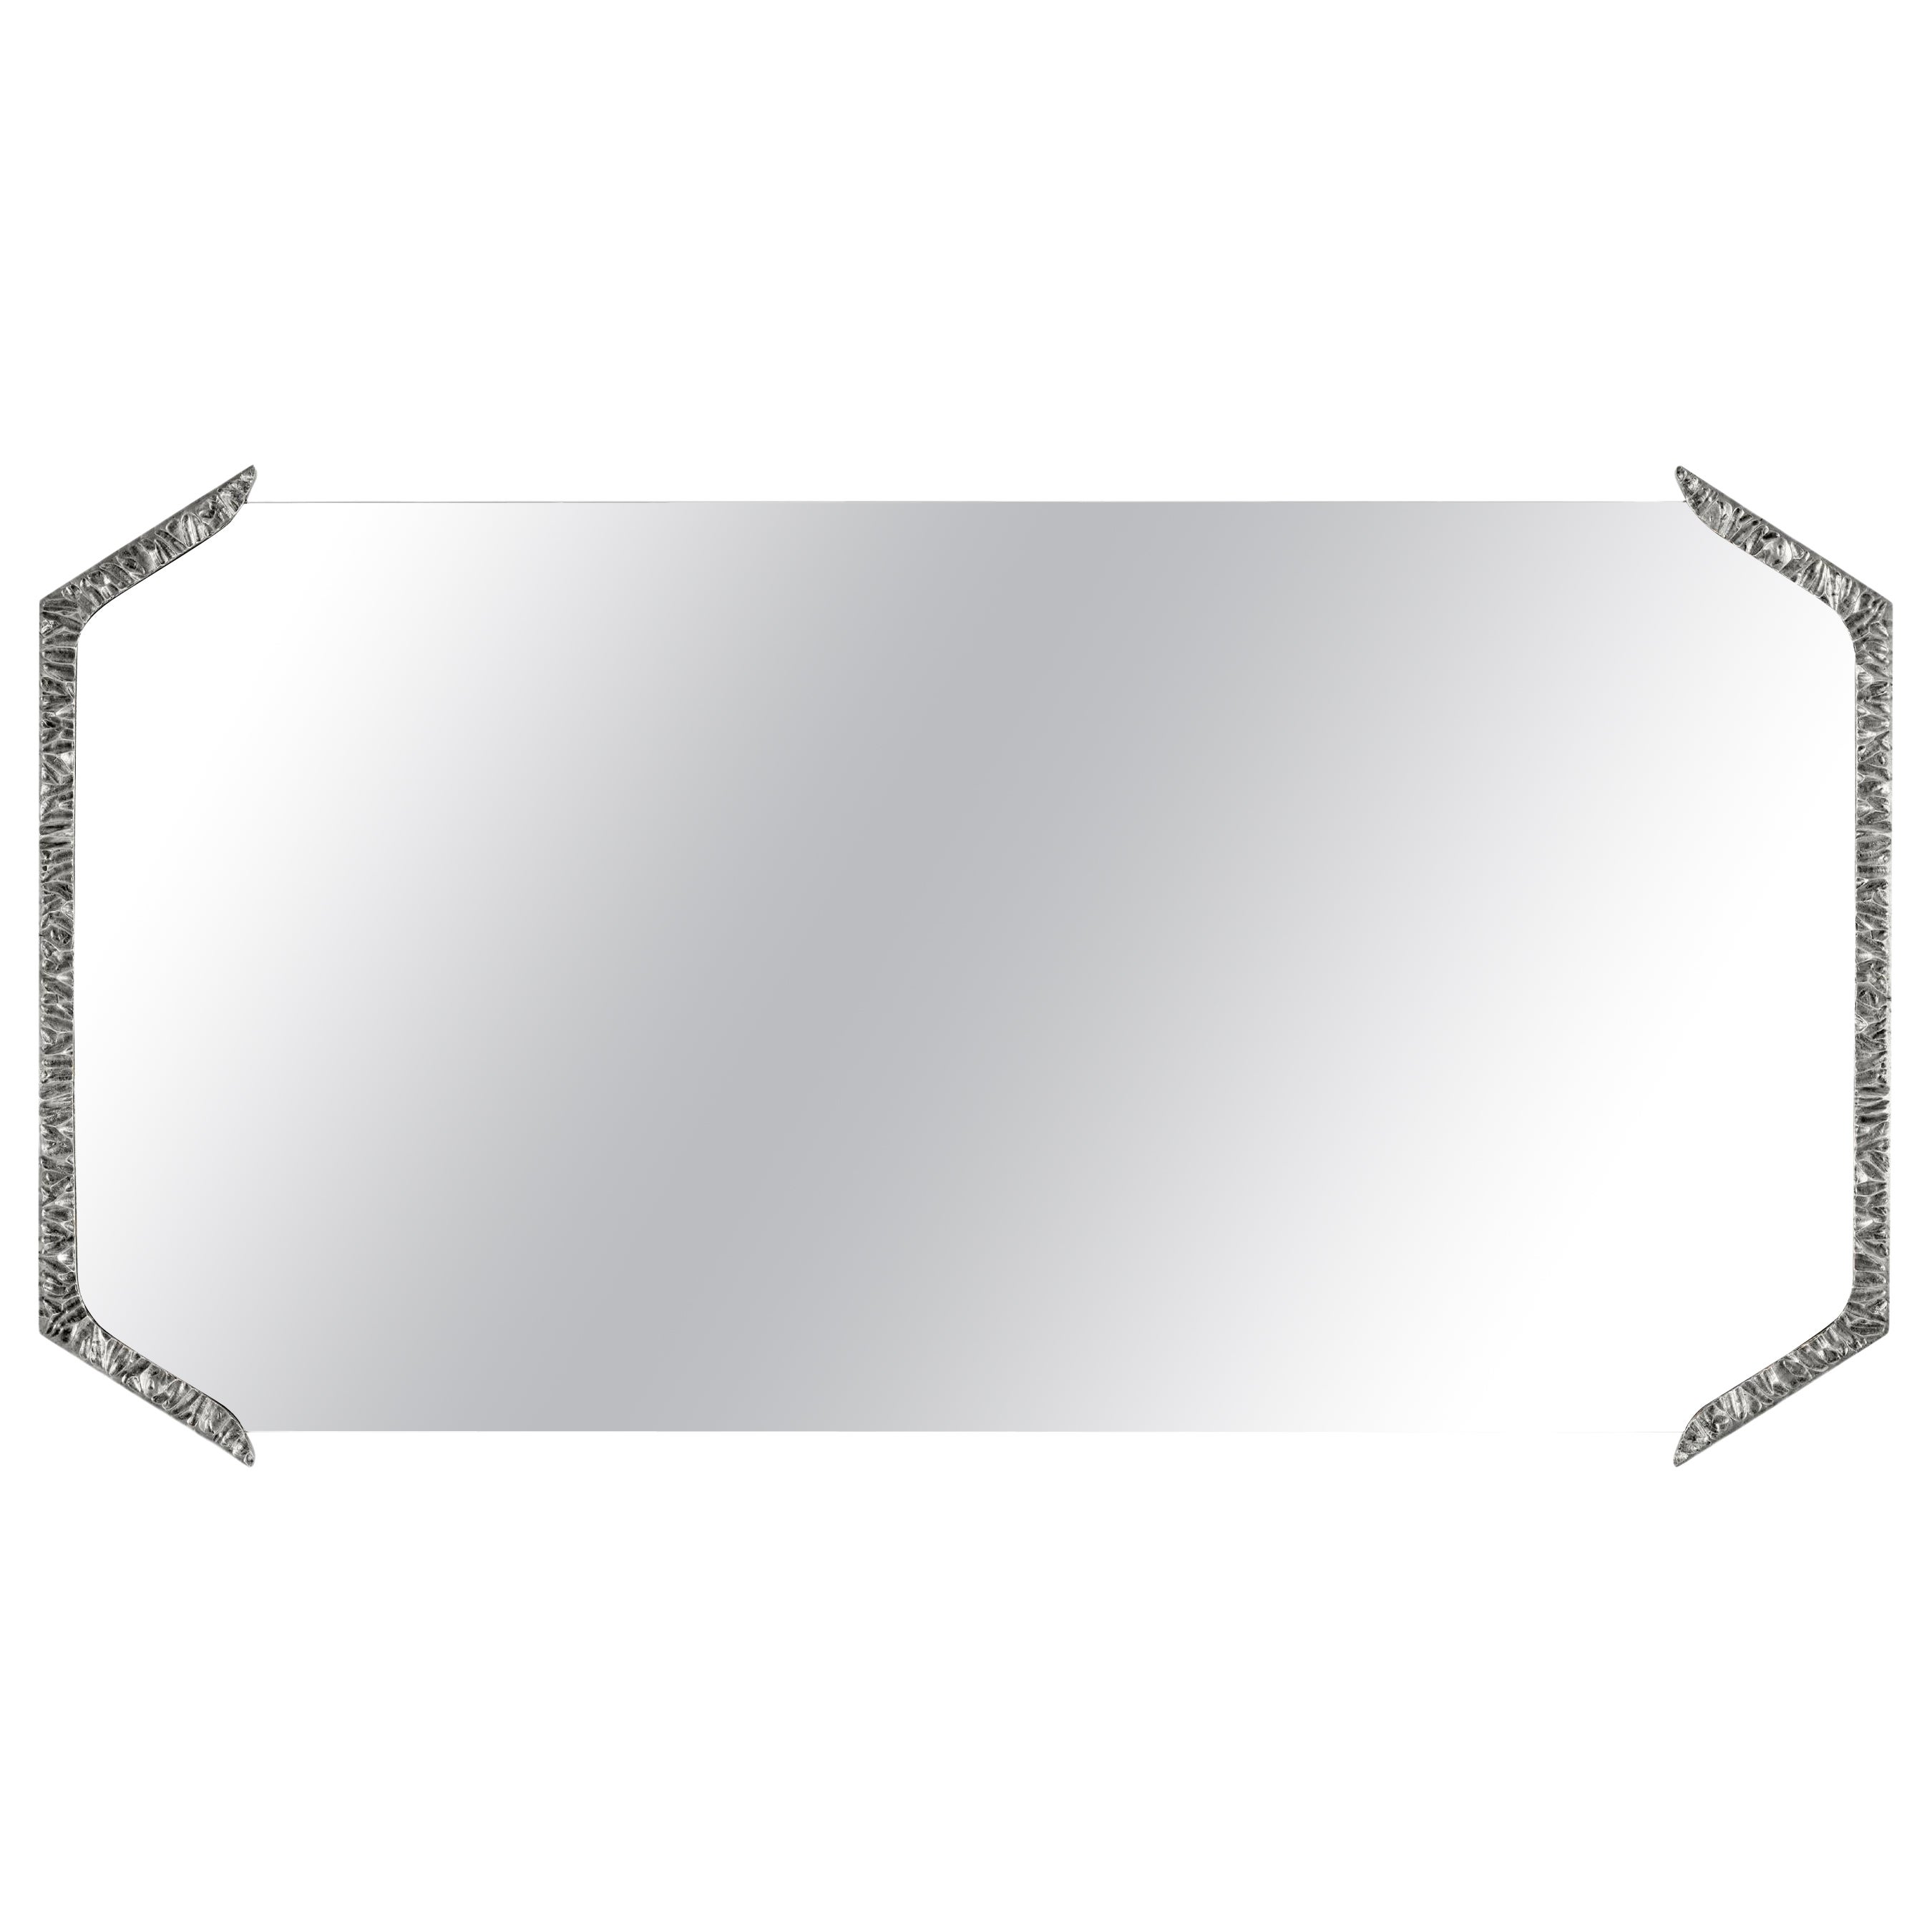 Miroir rectangulaire Alentejo, nickel, InsidherLand de Joana Santos Barbosa